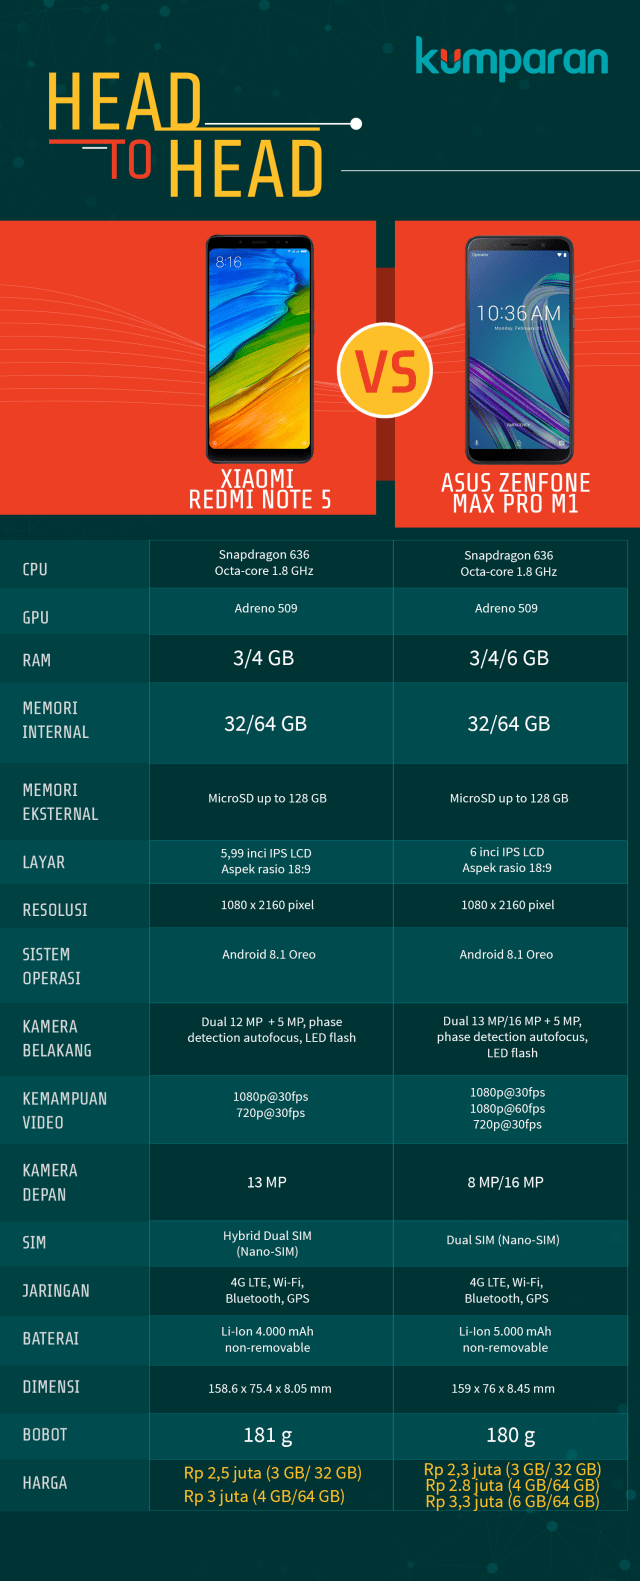 Xiaomi Redmi Note 5 vs Asus Zenfone Max Pro M1. (Foto: Mateus Situmorang/kumparan)